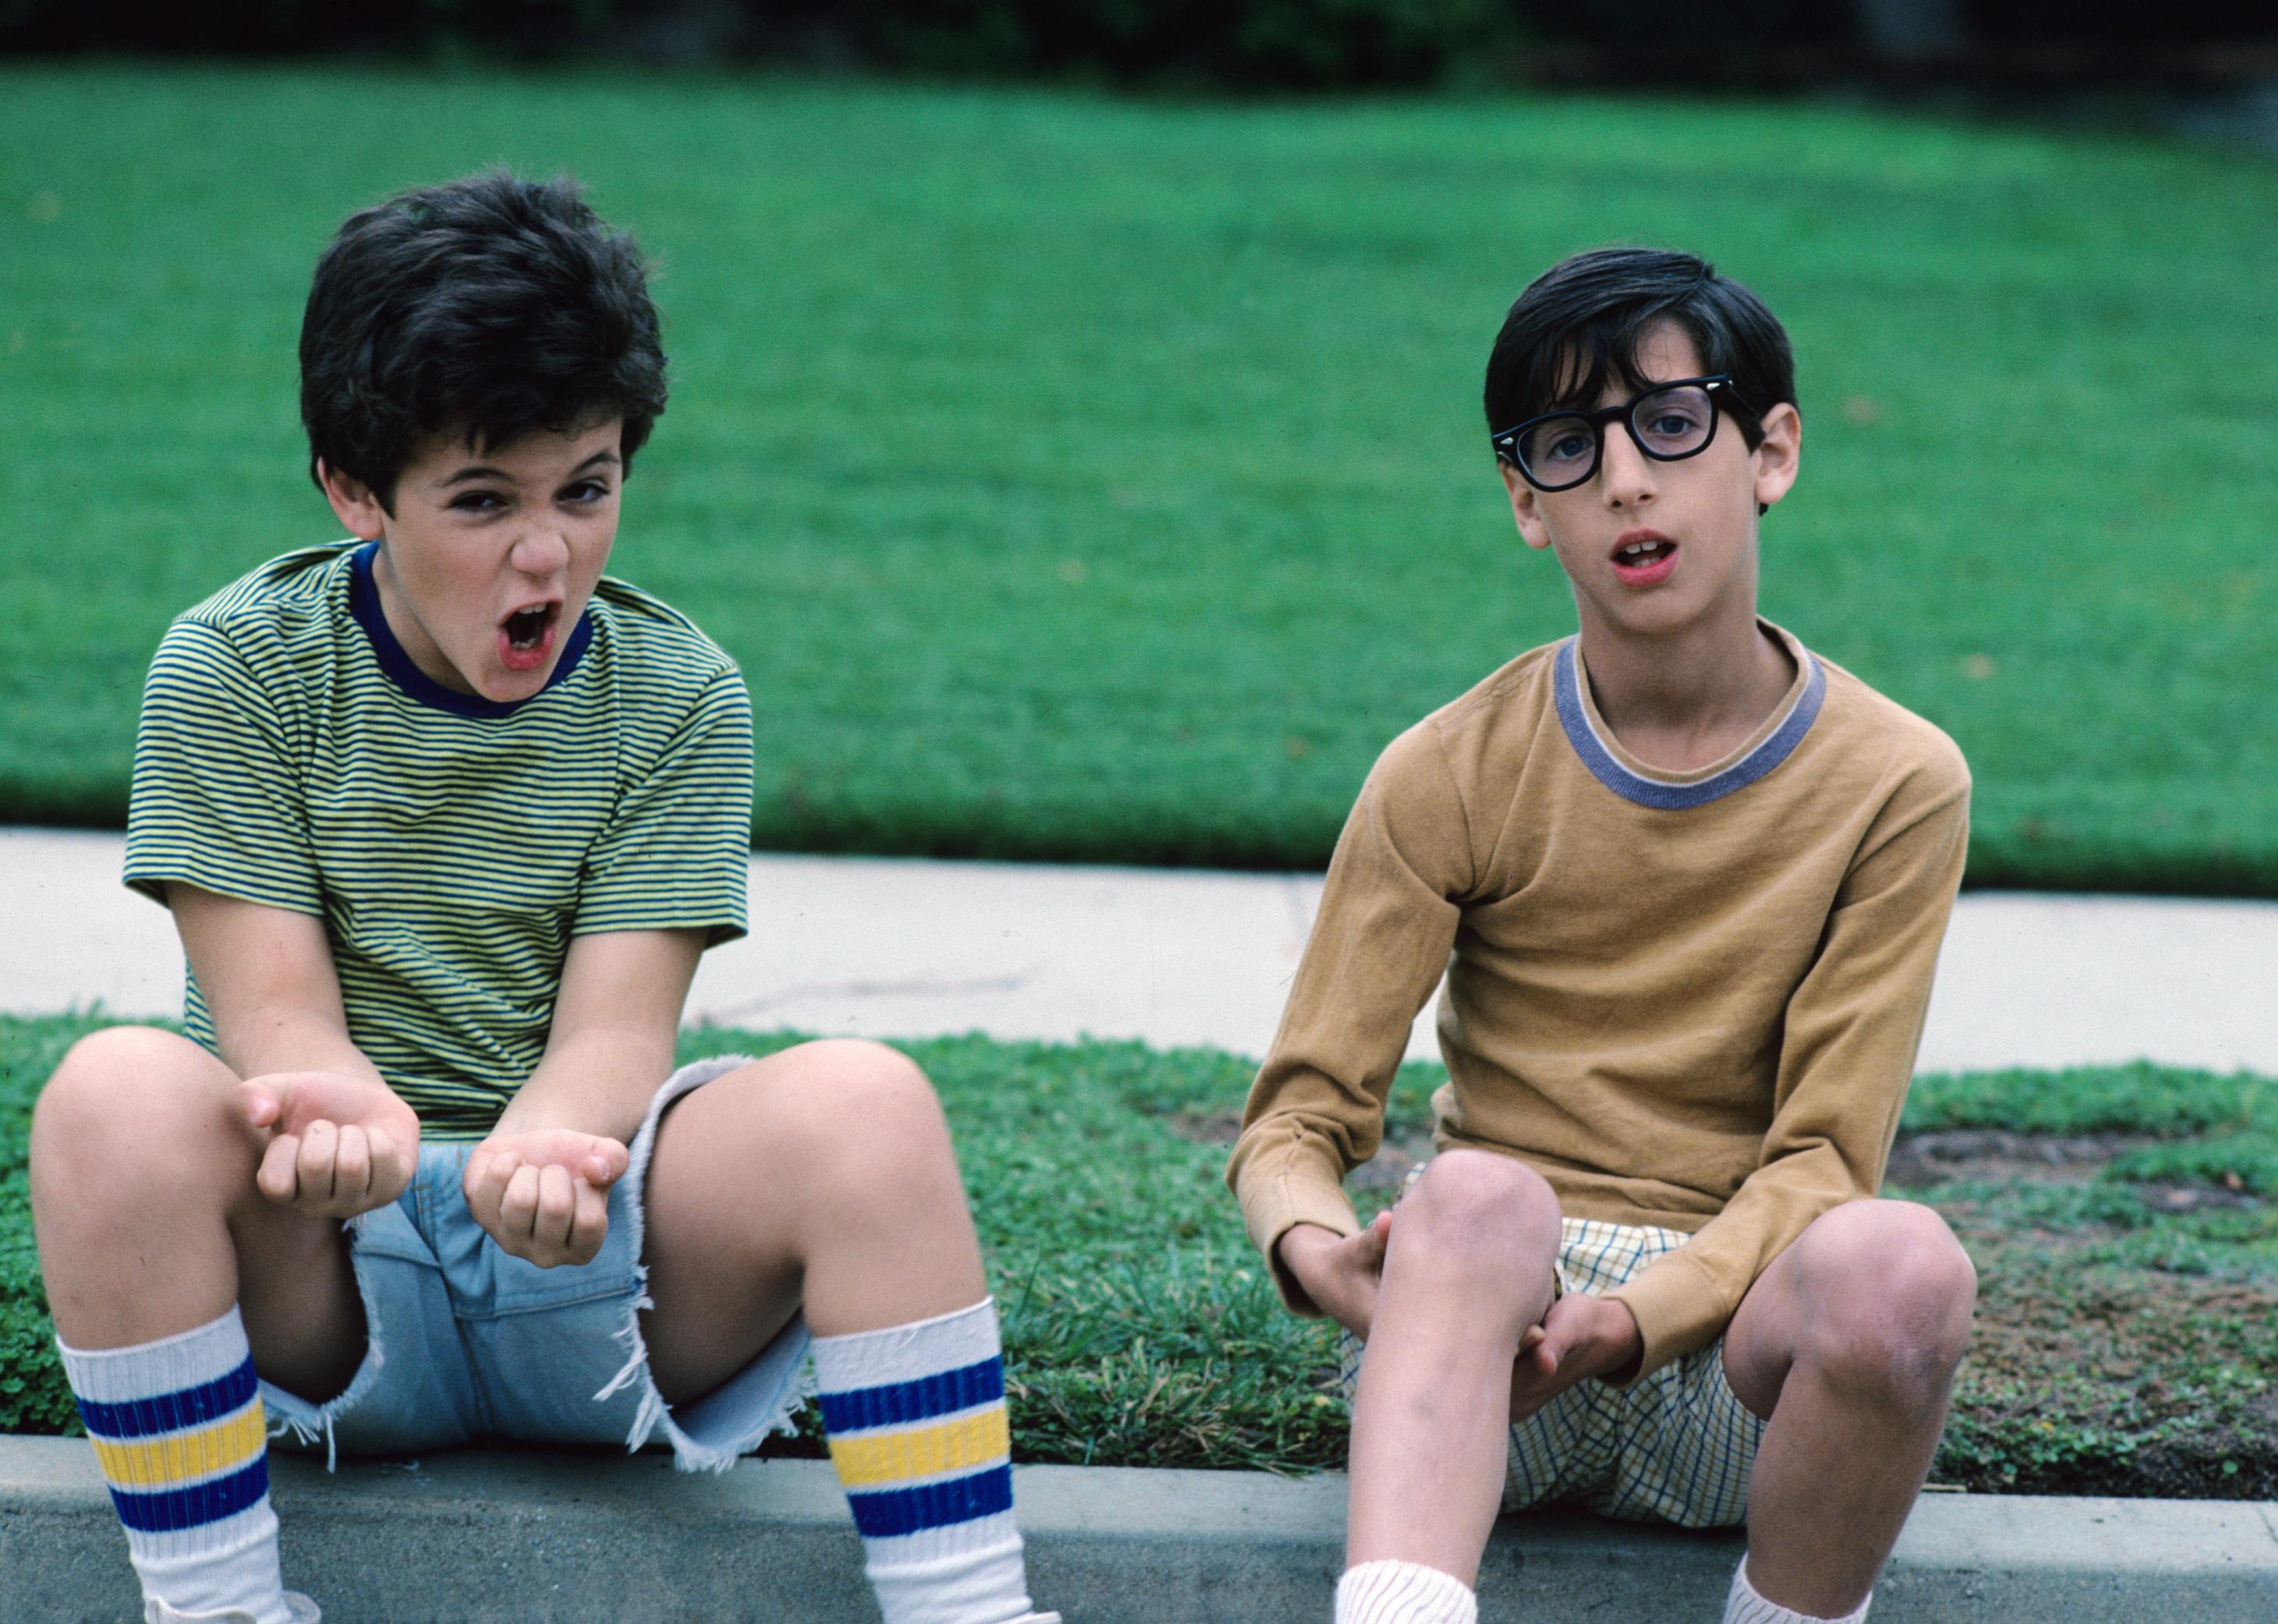 Fred Savage and Josh Saviano, as kids, sit on a curb.